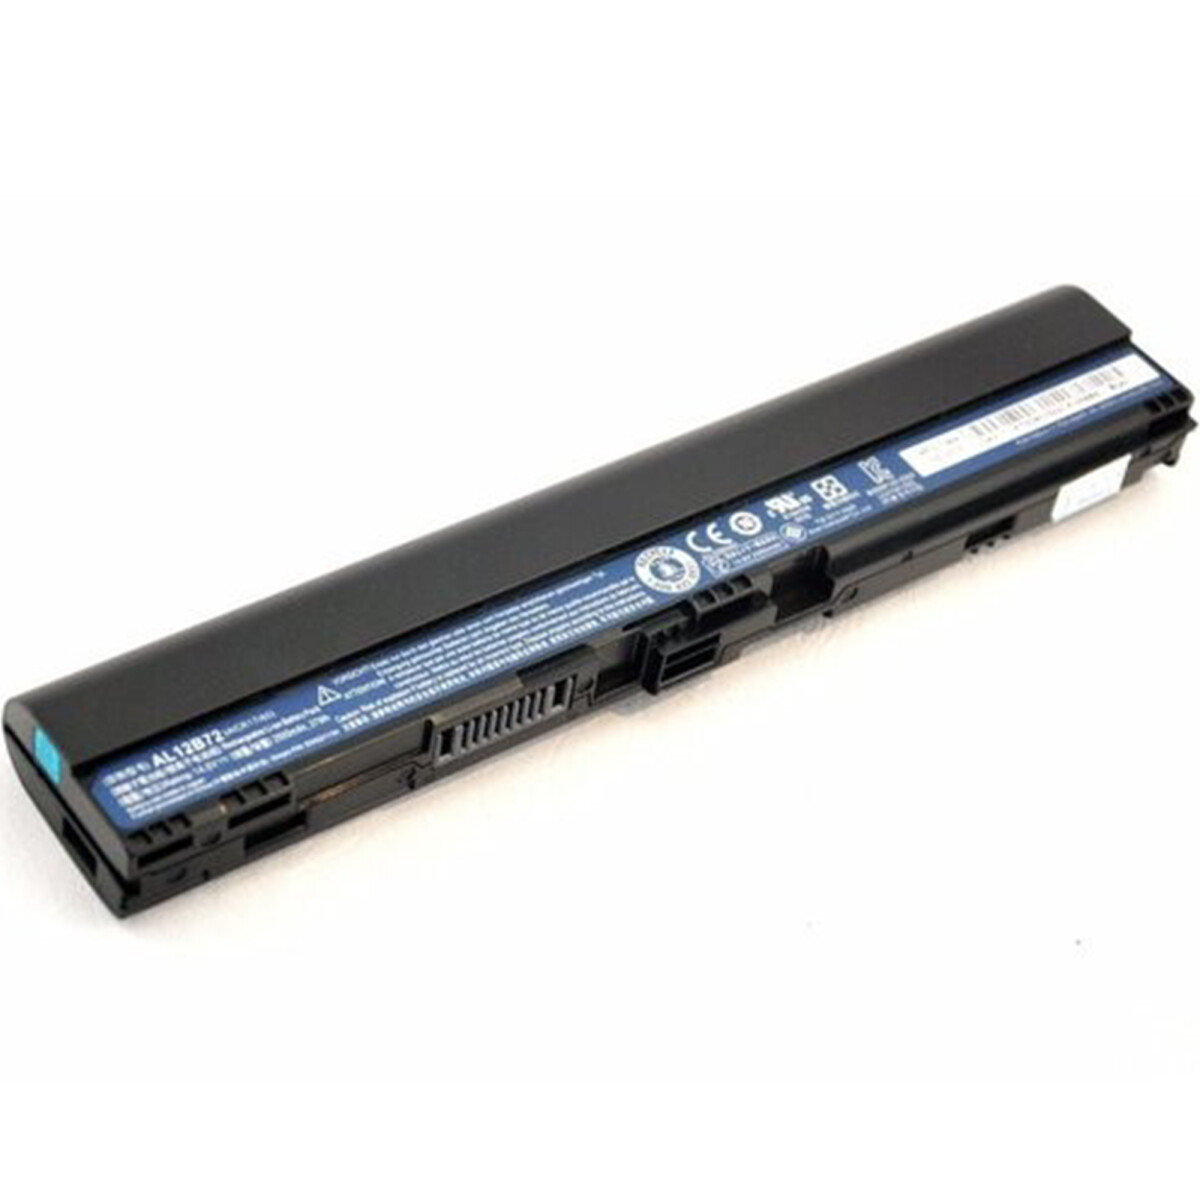 Bateria Acer Aspire 725/al12b32 